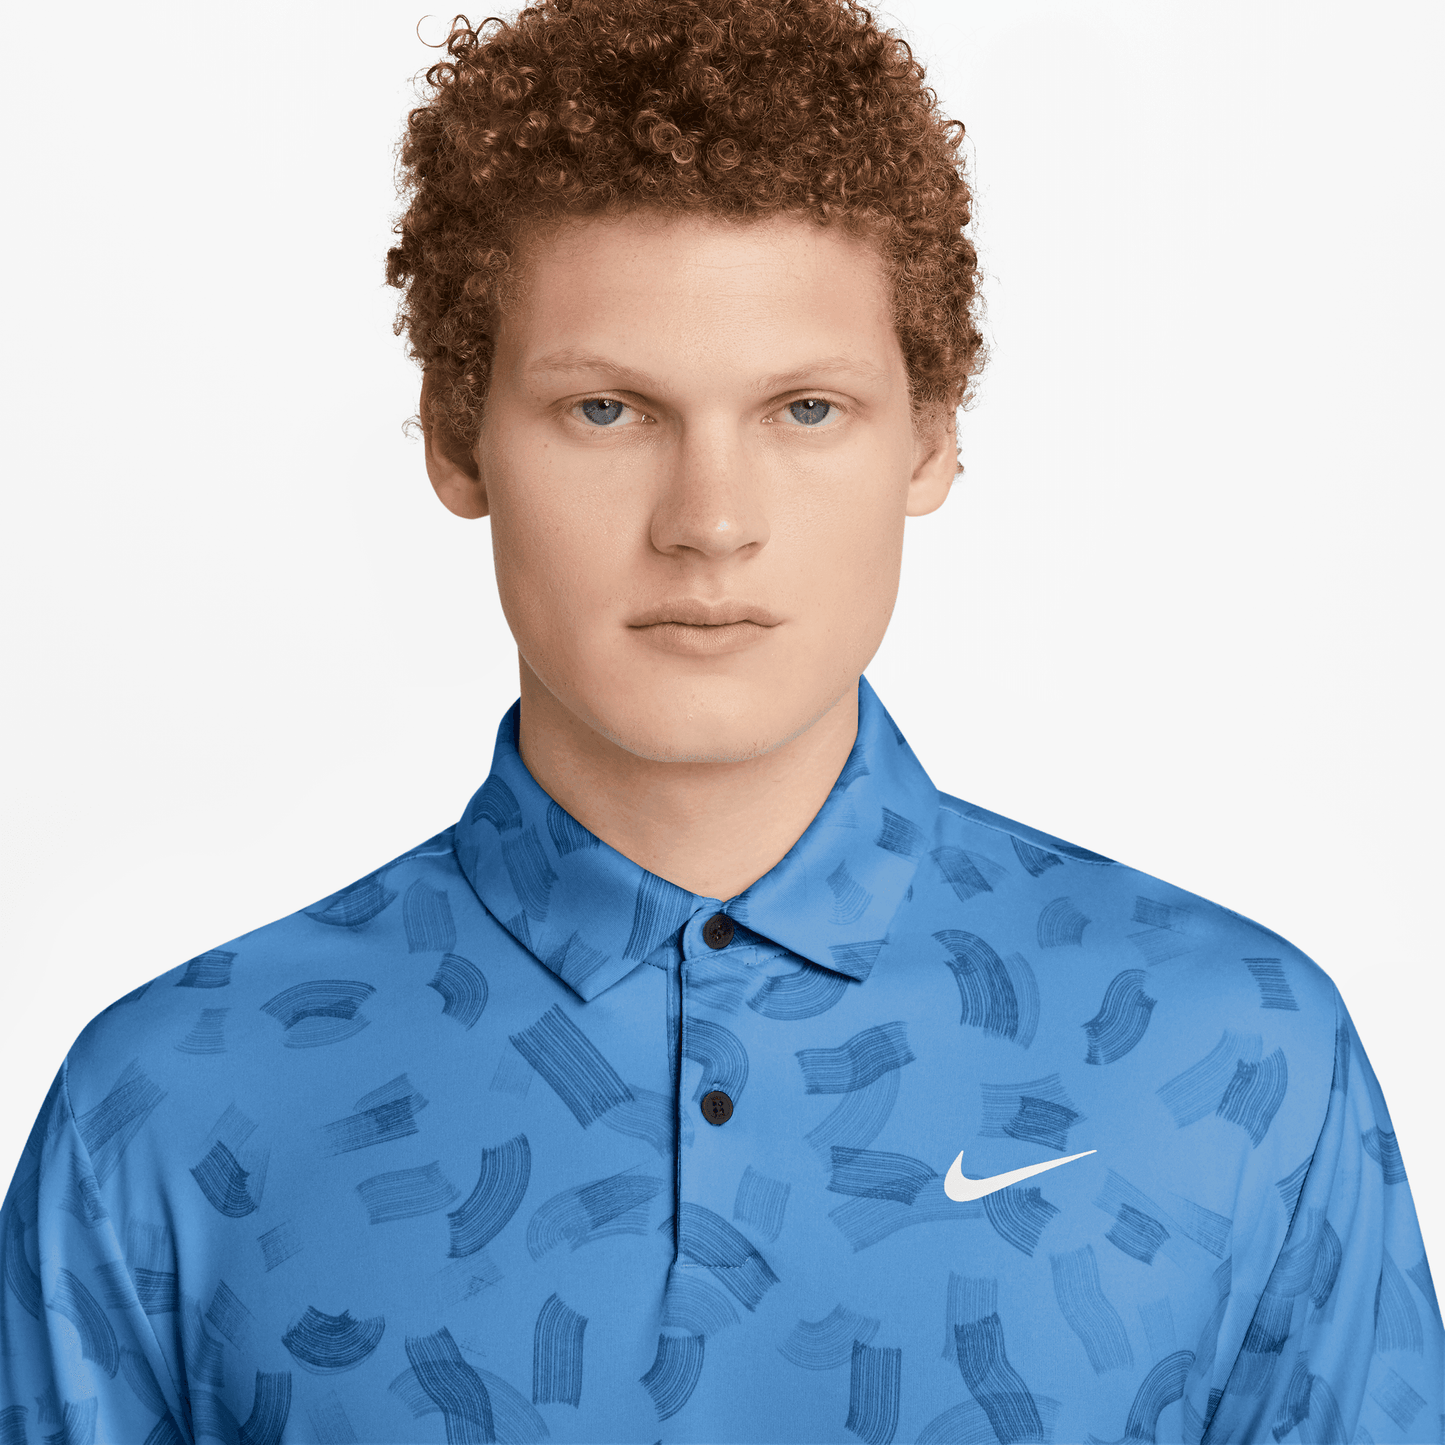 Nike Golf Dri-FIT Micro Print Tour Polo Shirt FD5735 - 402   